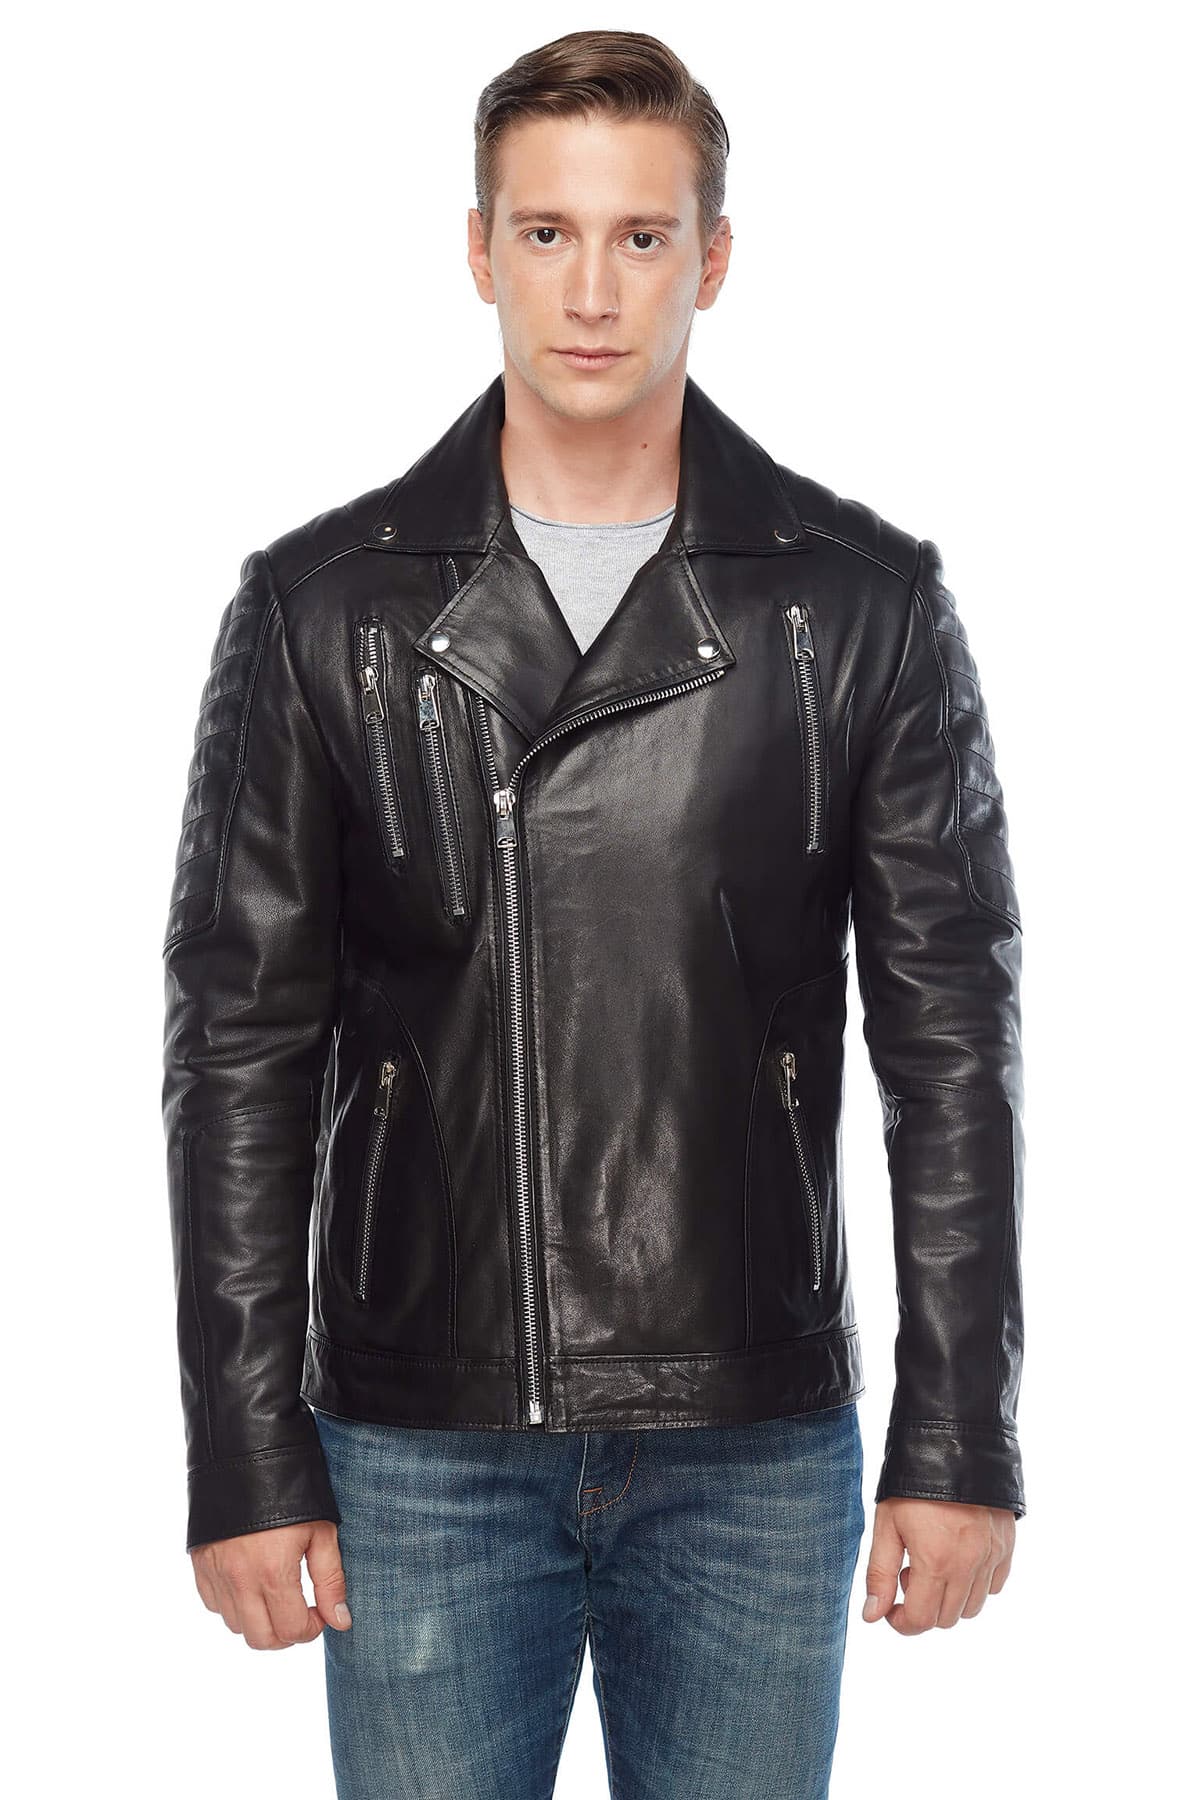 Oris Men's 100 % Real Black Leather Motorcycle Jacket